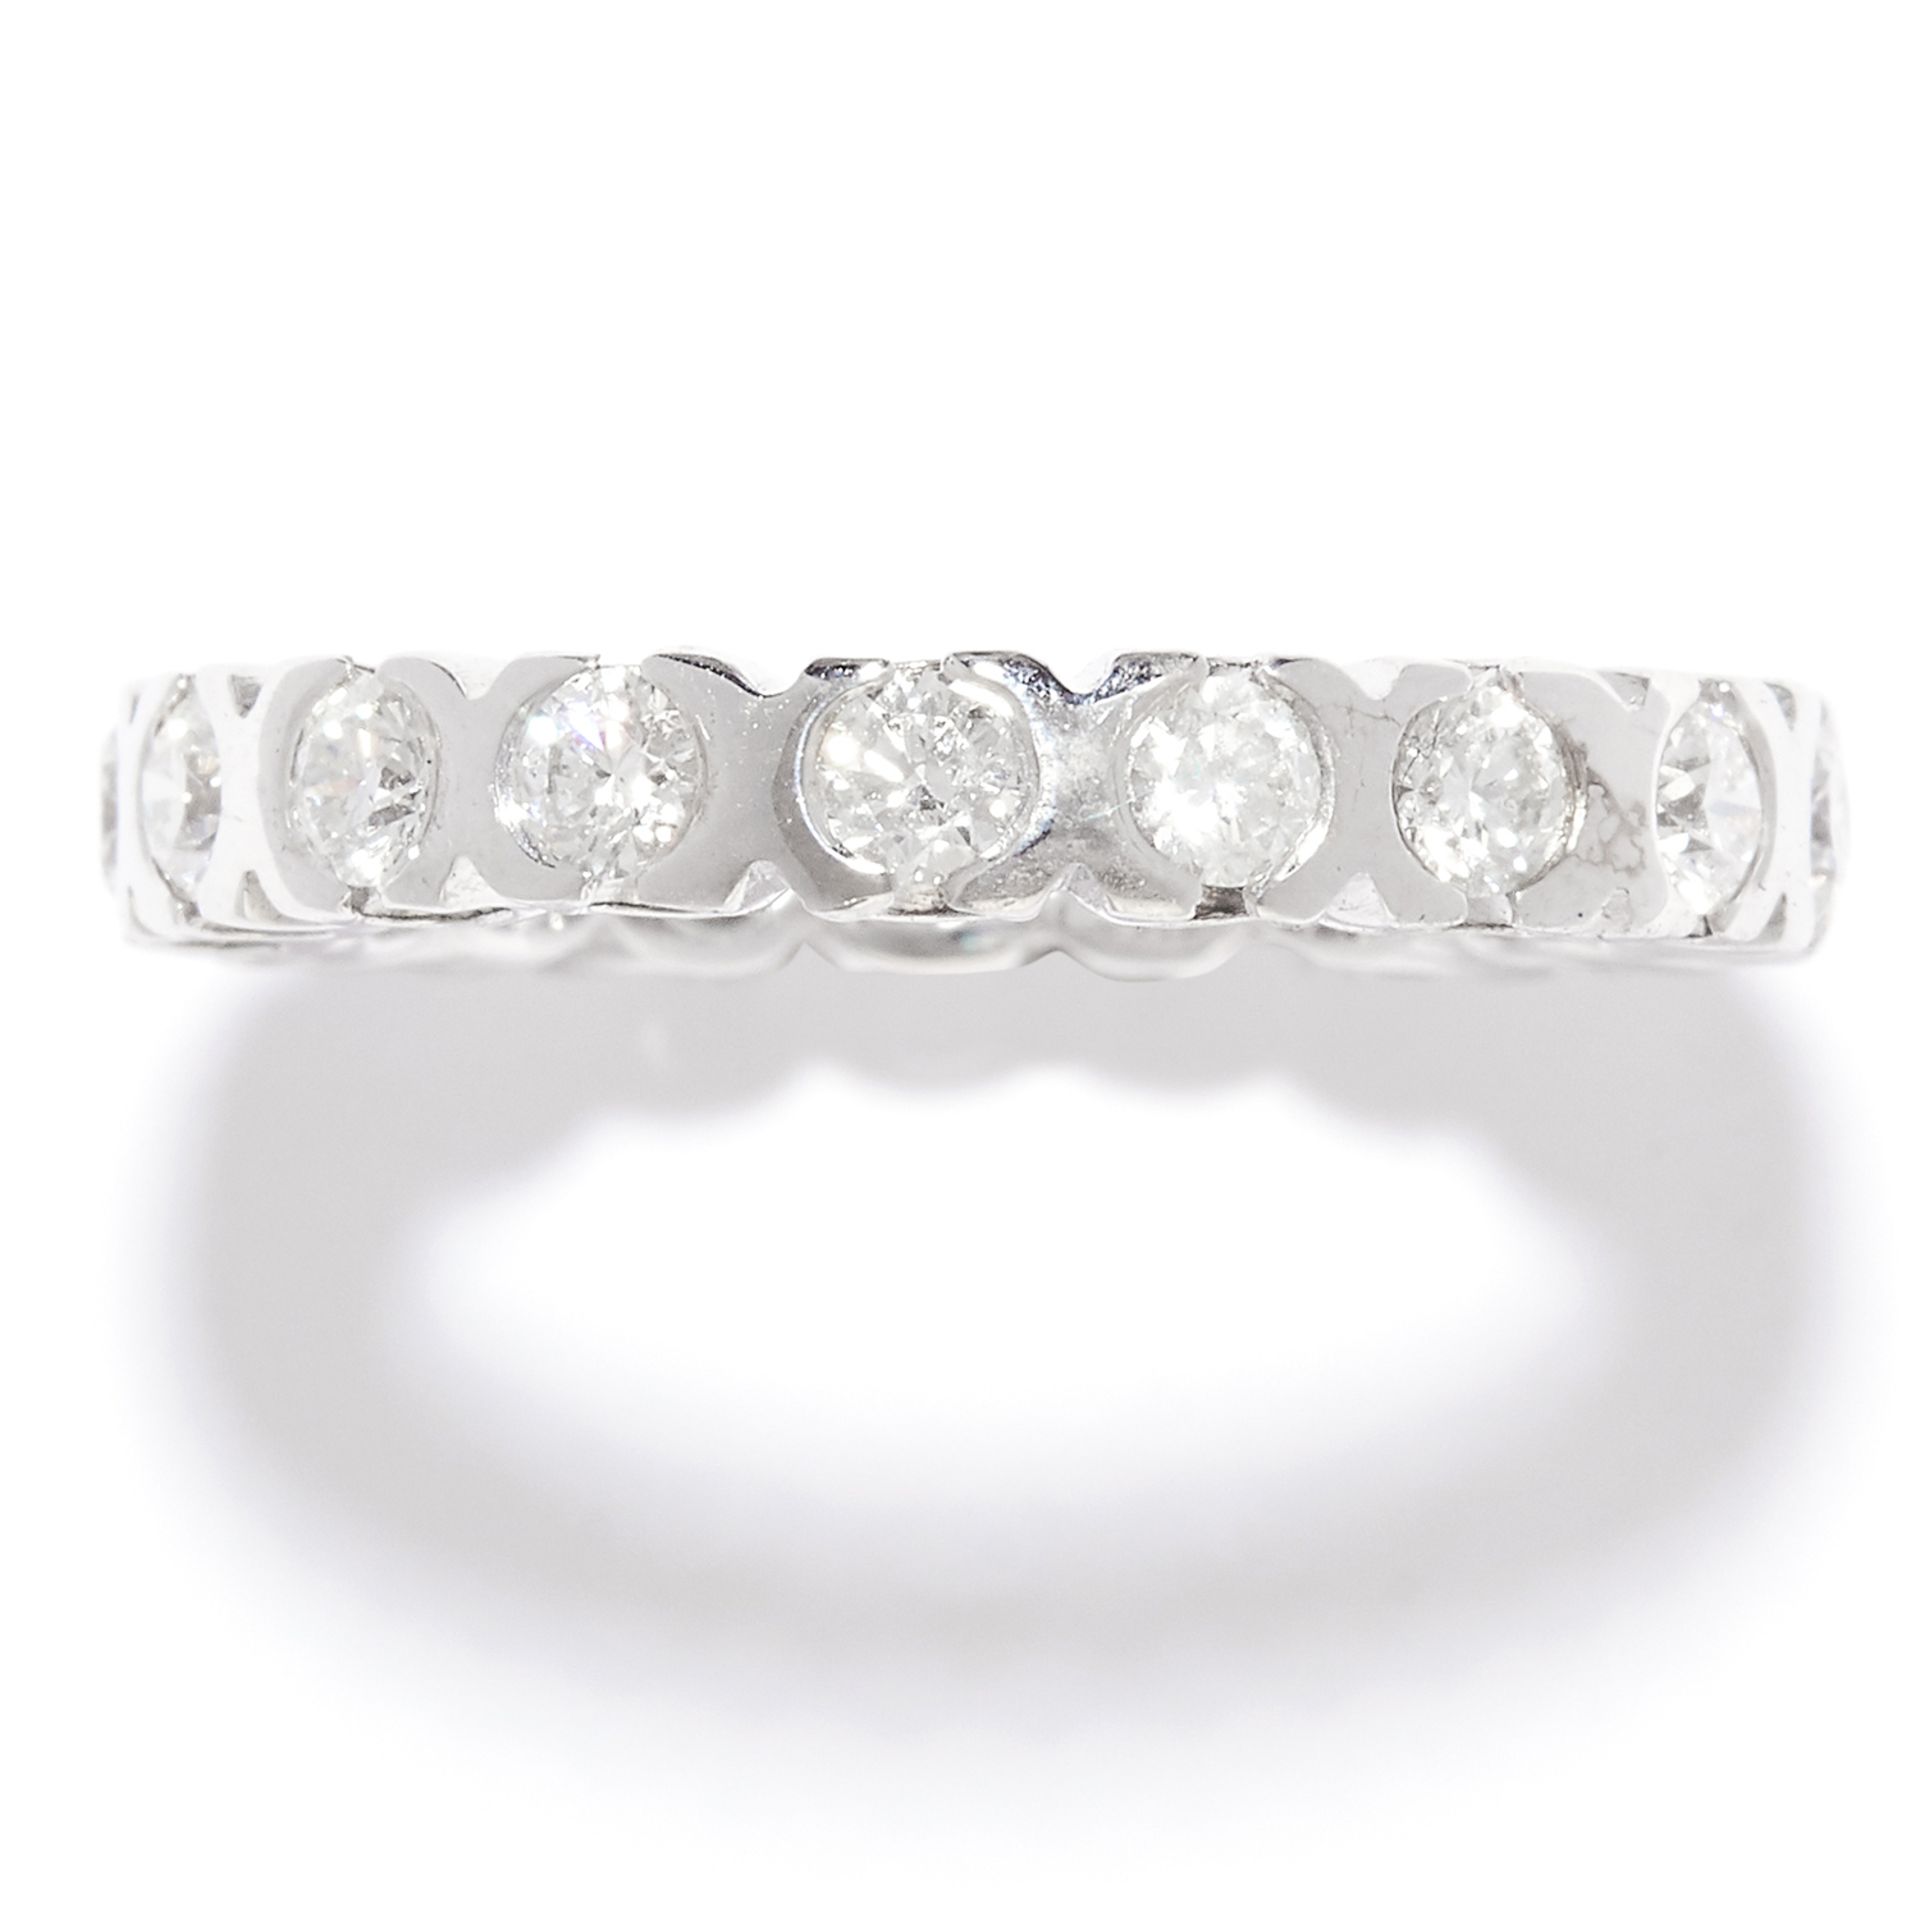 1.40 CARAT DIAMOND ETERNITY RING in 18ct white gold or platinum, set with round cut diamonds